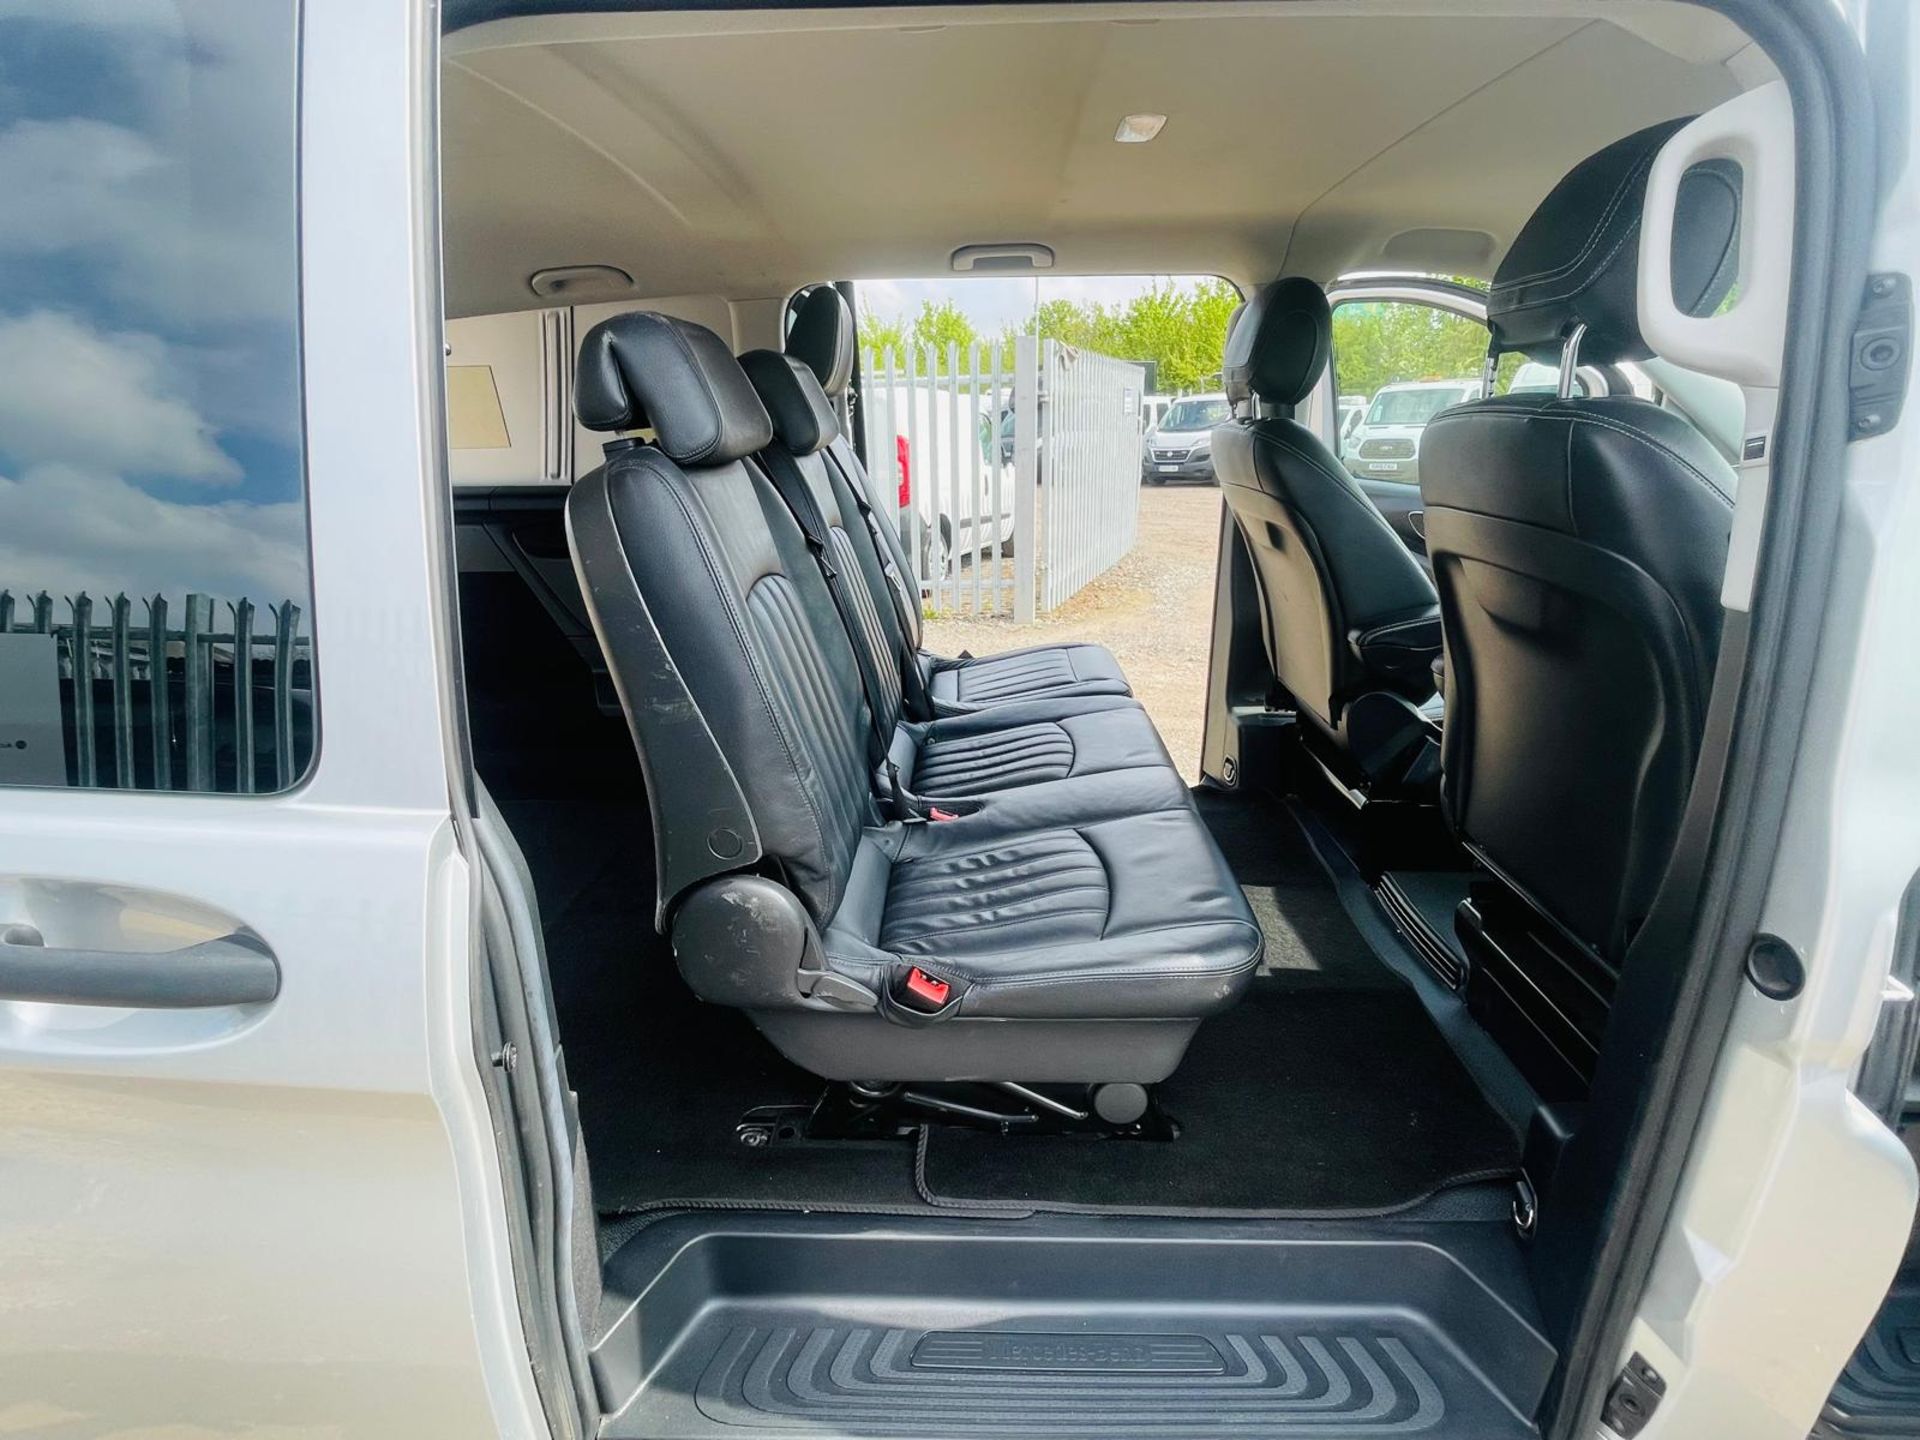 Mercedes-Benz Vito Premium 2.1 119 CDI 7G Tronic Crew Cab LWB Automatic 2019'19 Reg'- Alloy Wheels - Image 27 of 31